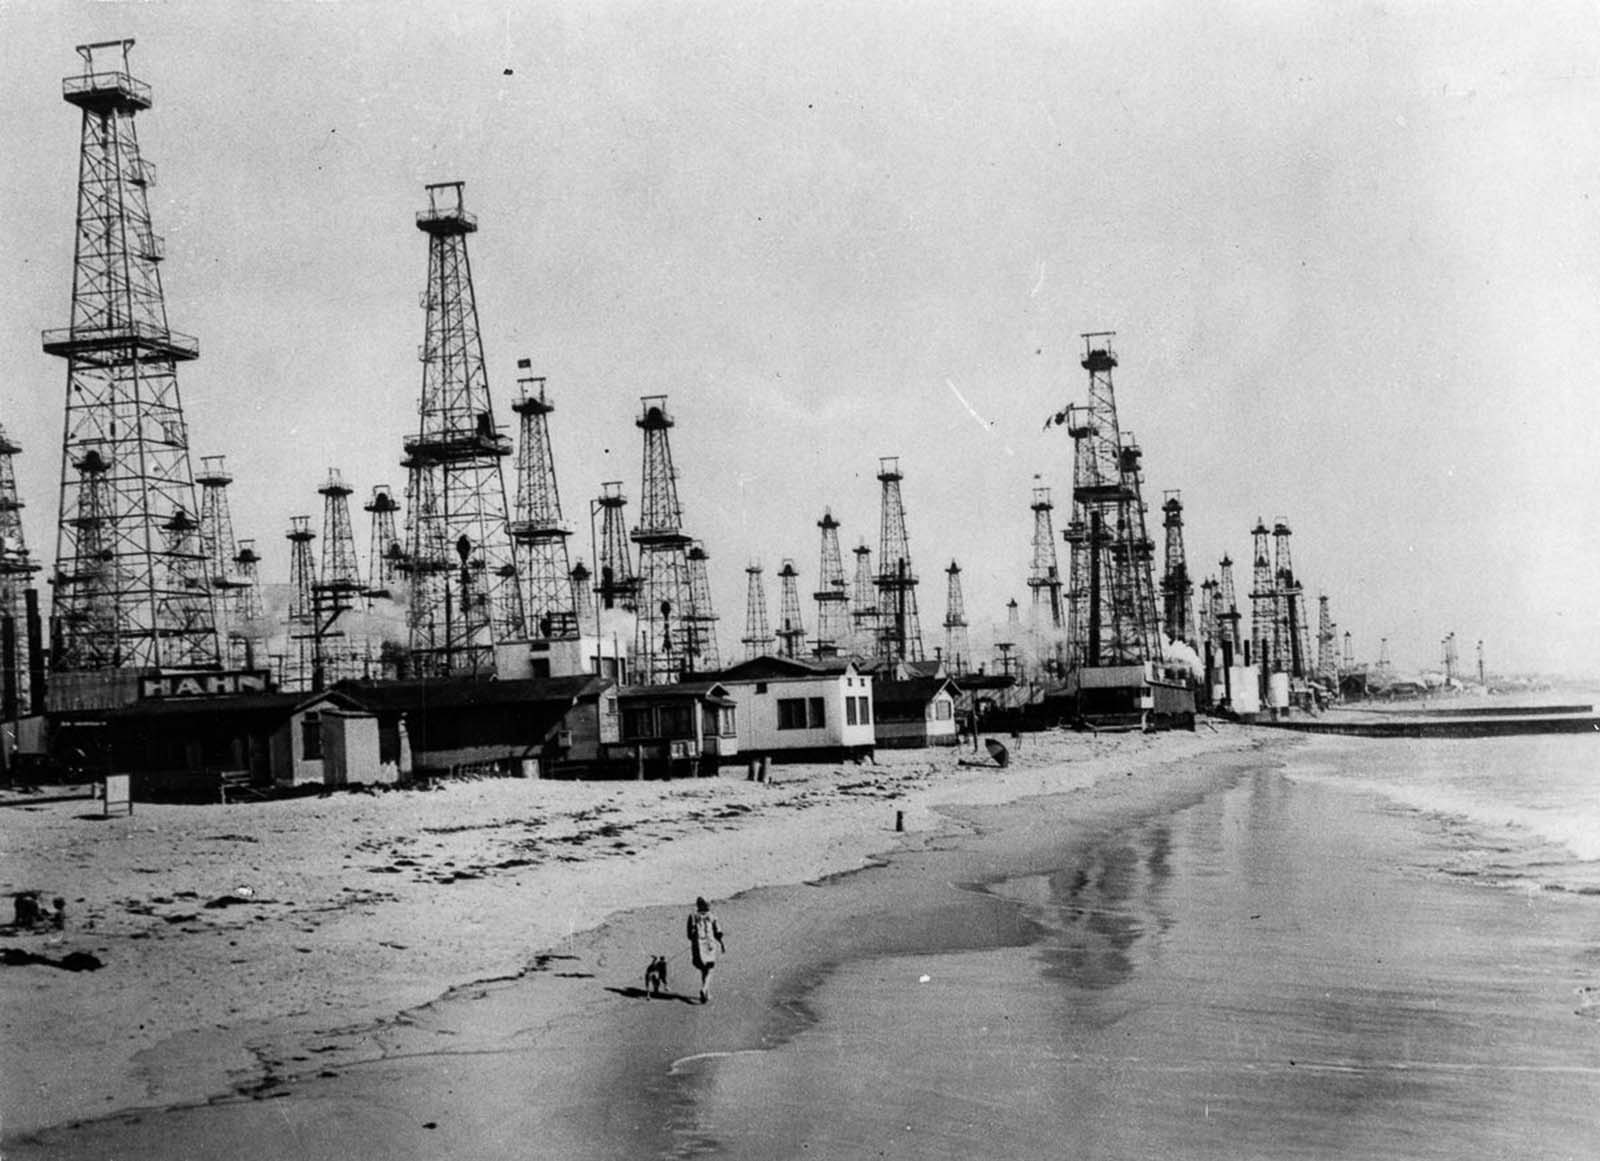 Oil derricks line the coast of Venice, California, 1920